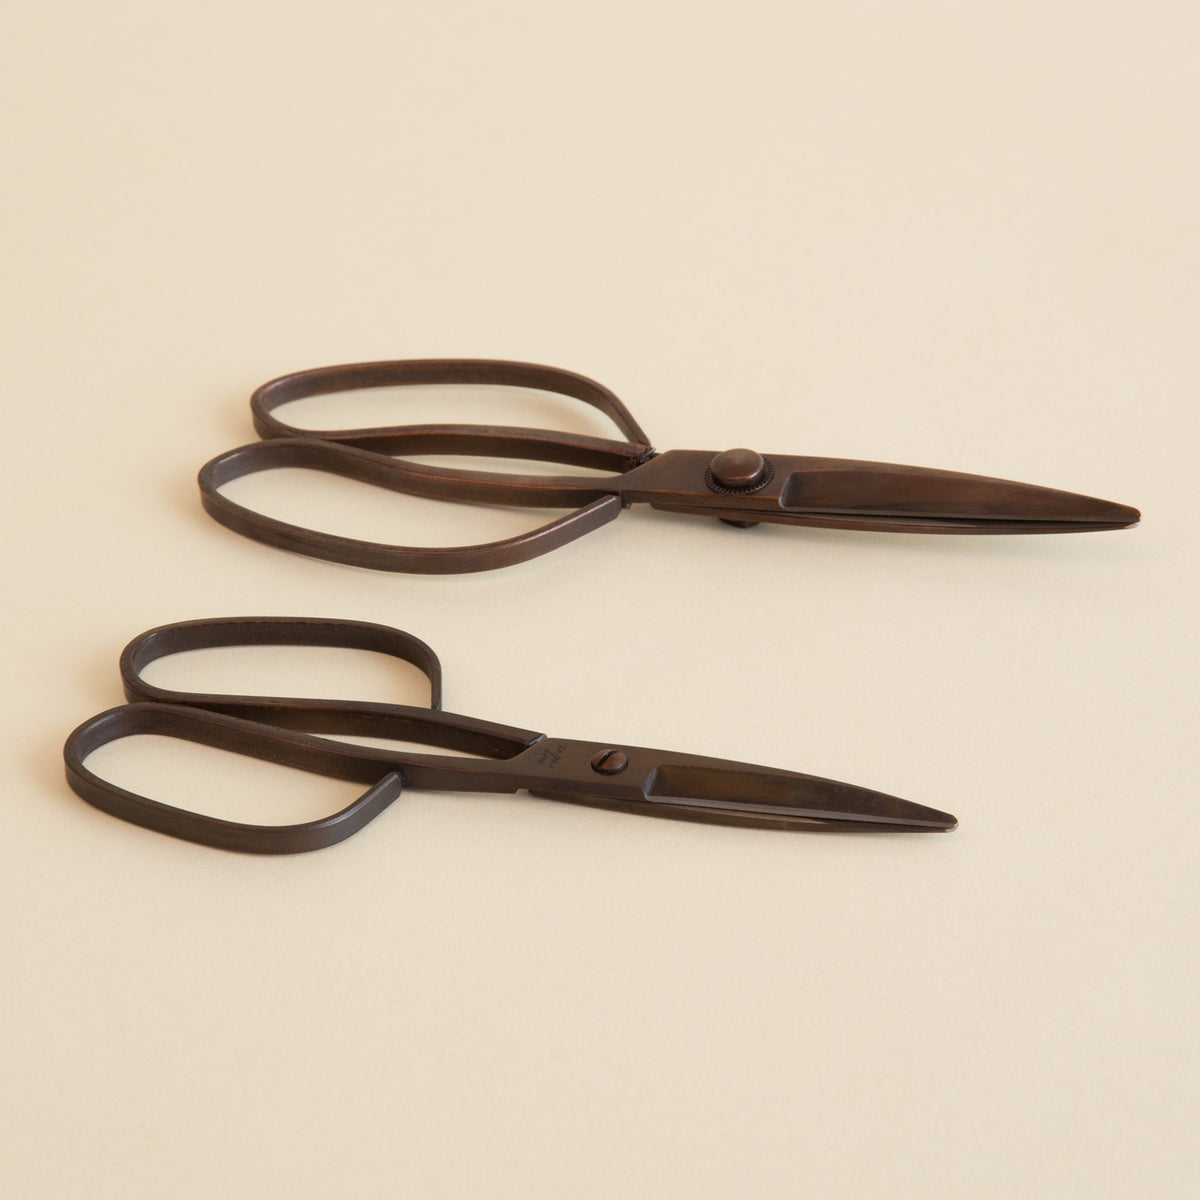 Household Scissors – The Good Liver